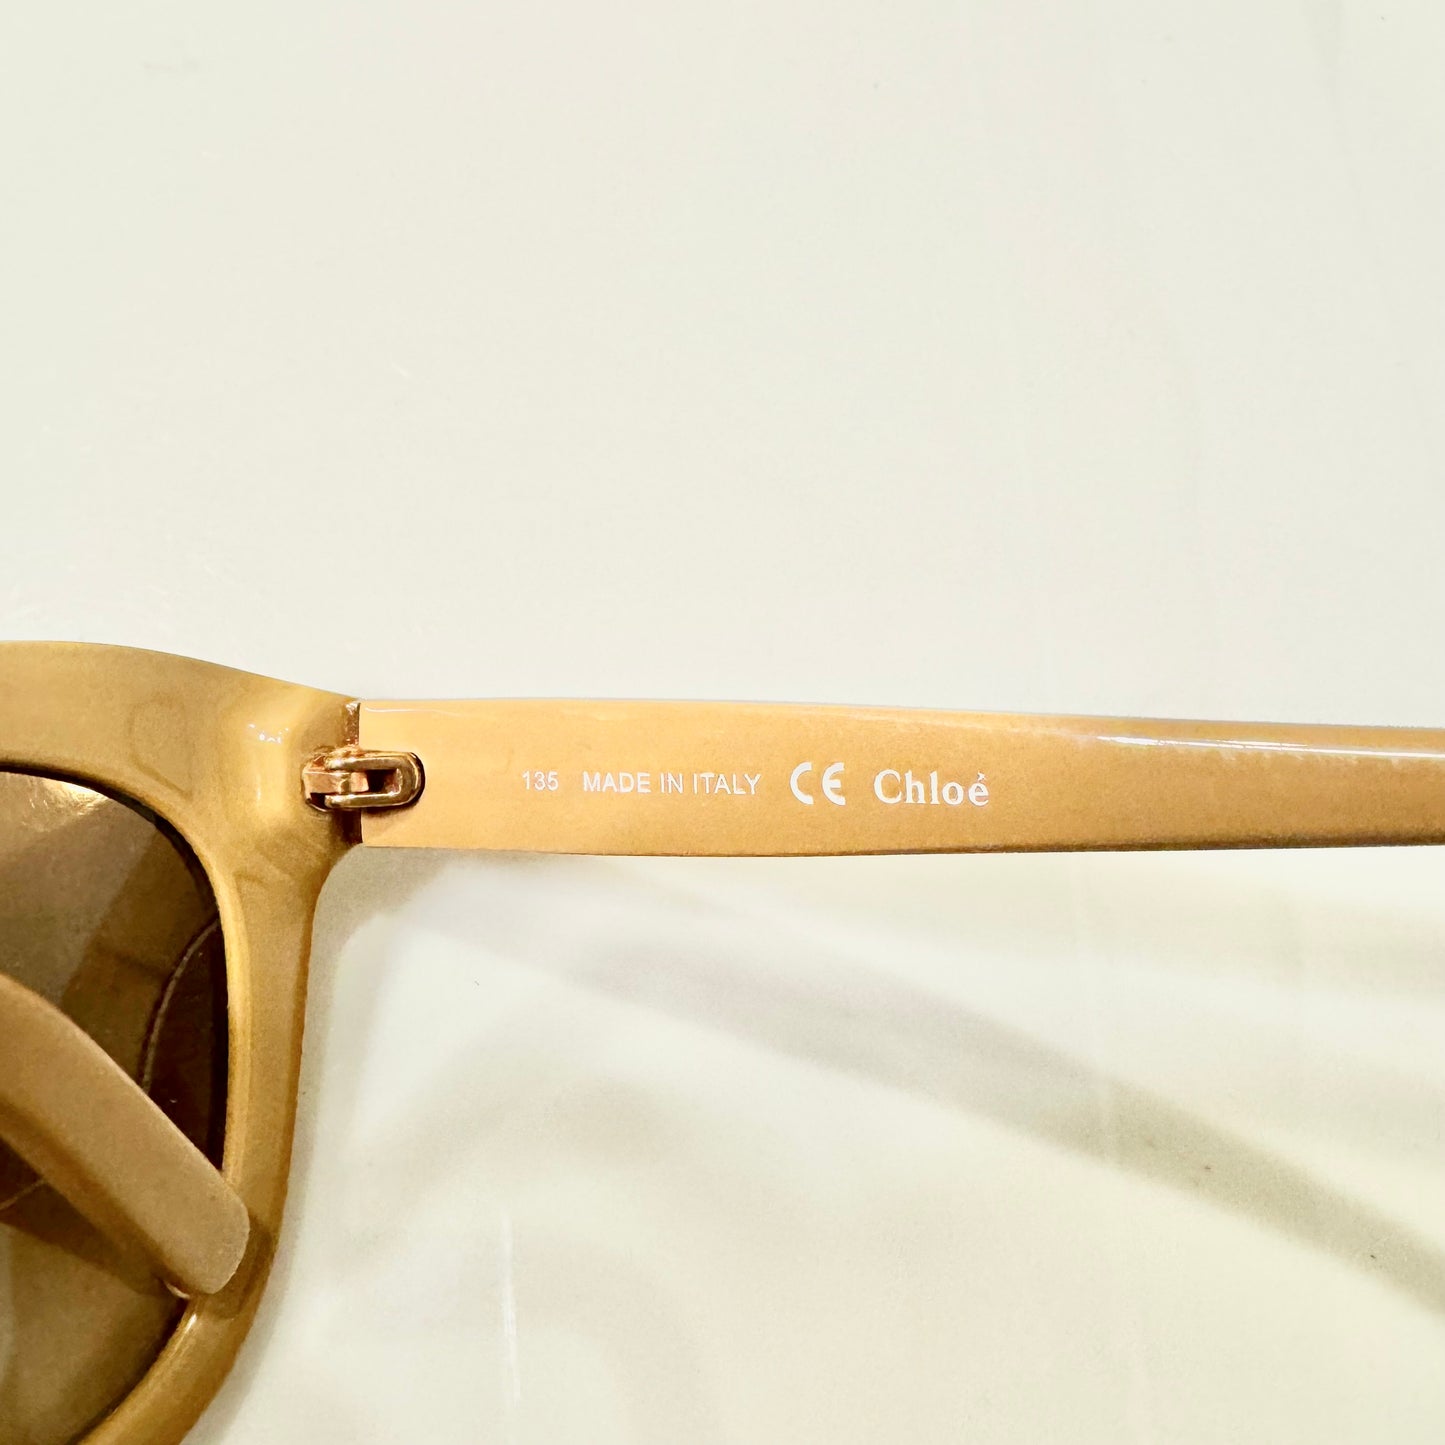 Sunglasses Luxury Designer By Chloe